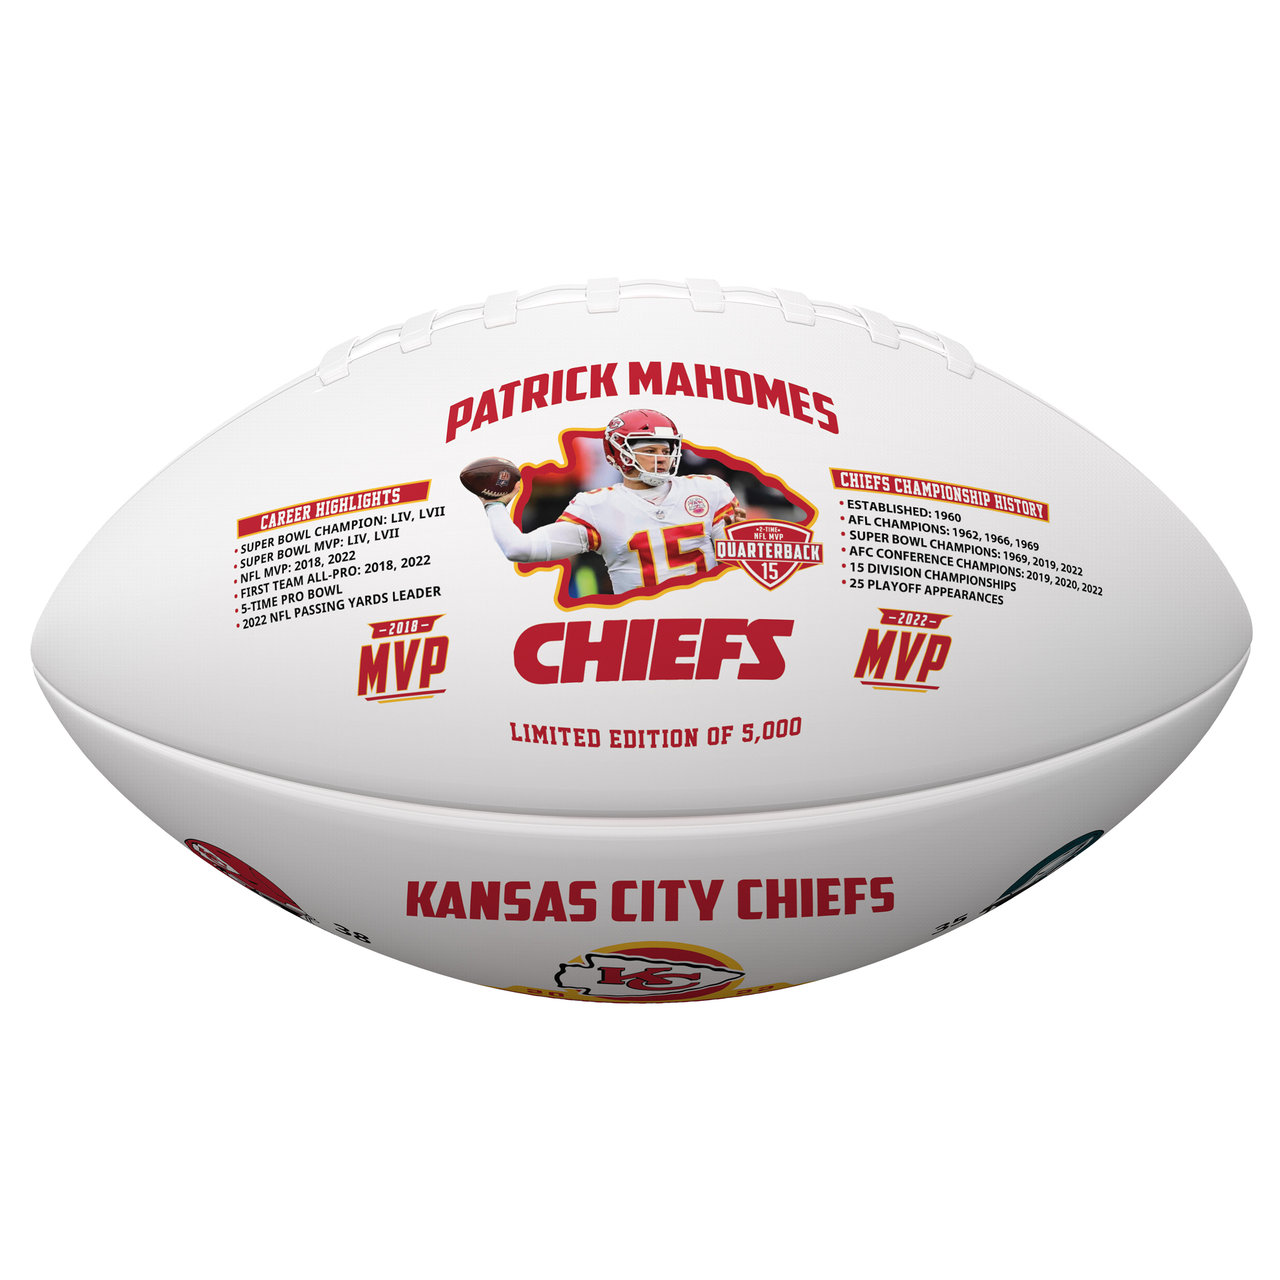 Chiefs Super Bowl Shirt Champions LVII Est 1960 Kansas City Chiefs